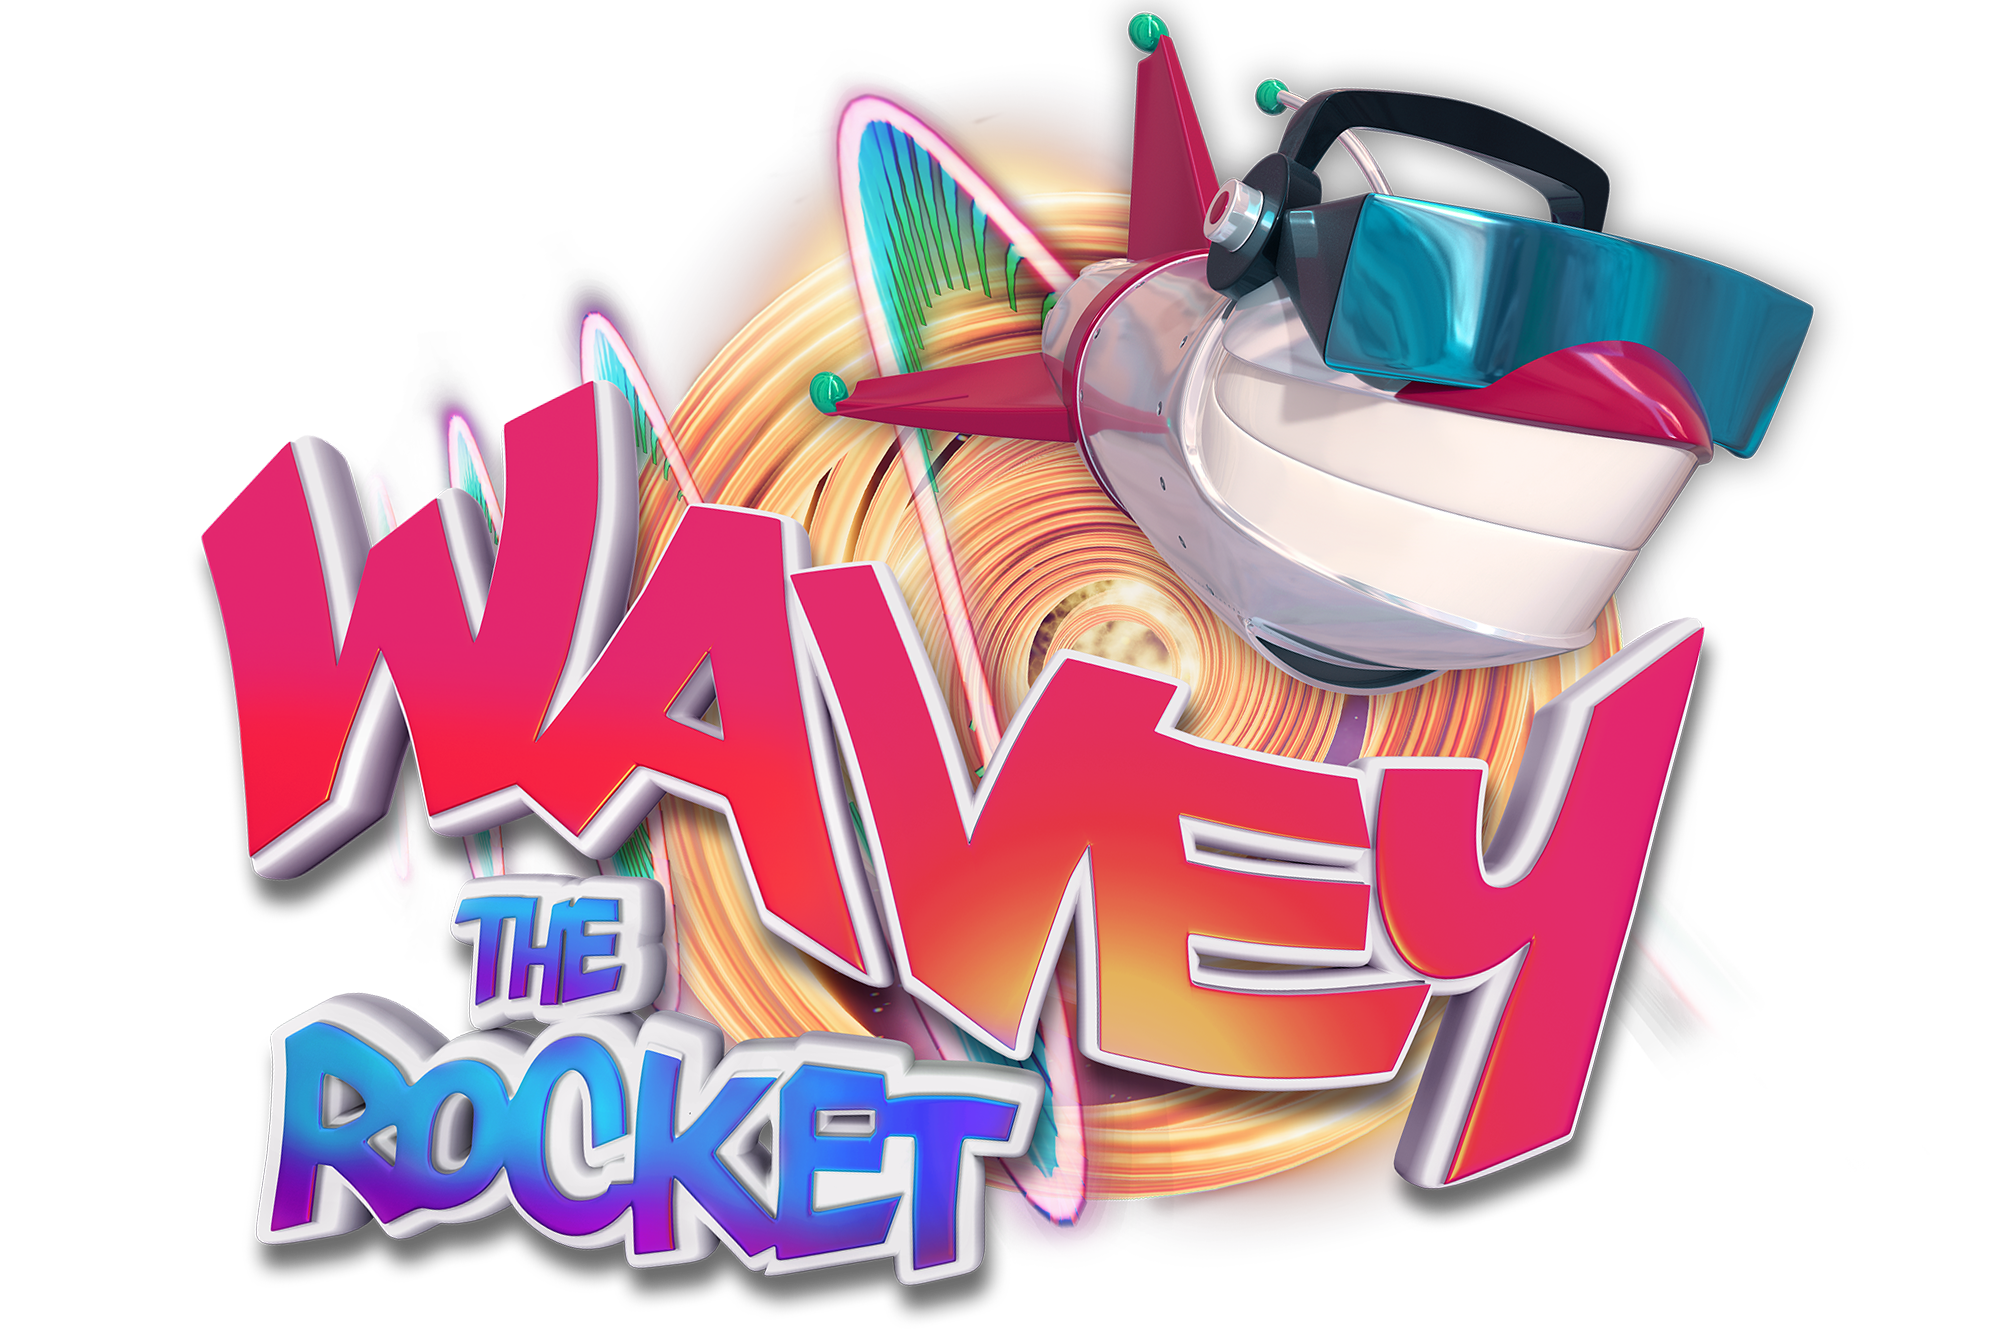 Wavey The Rocket - Demo